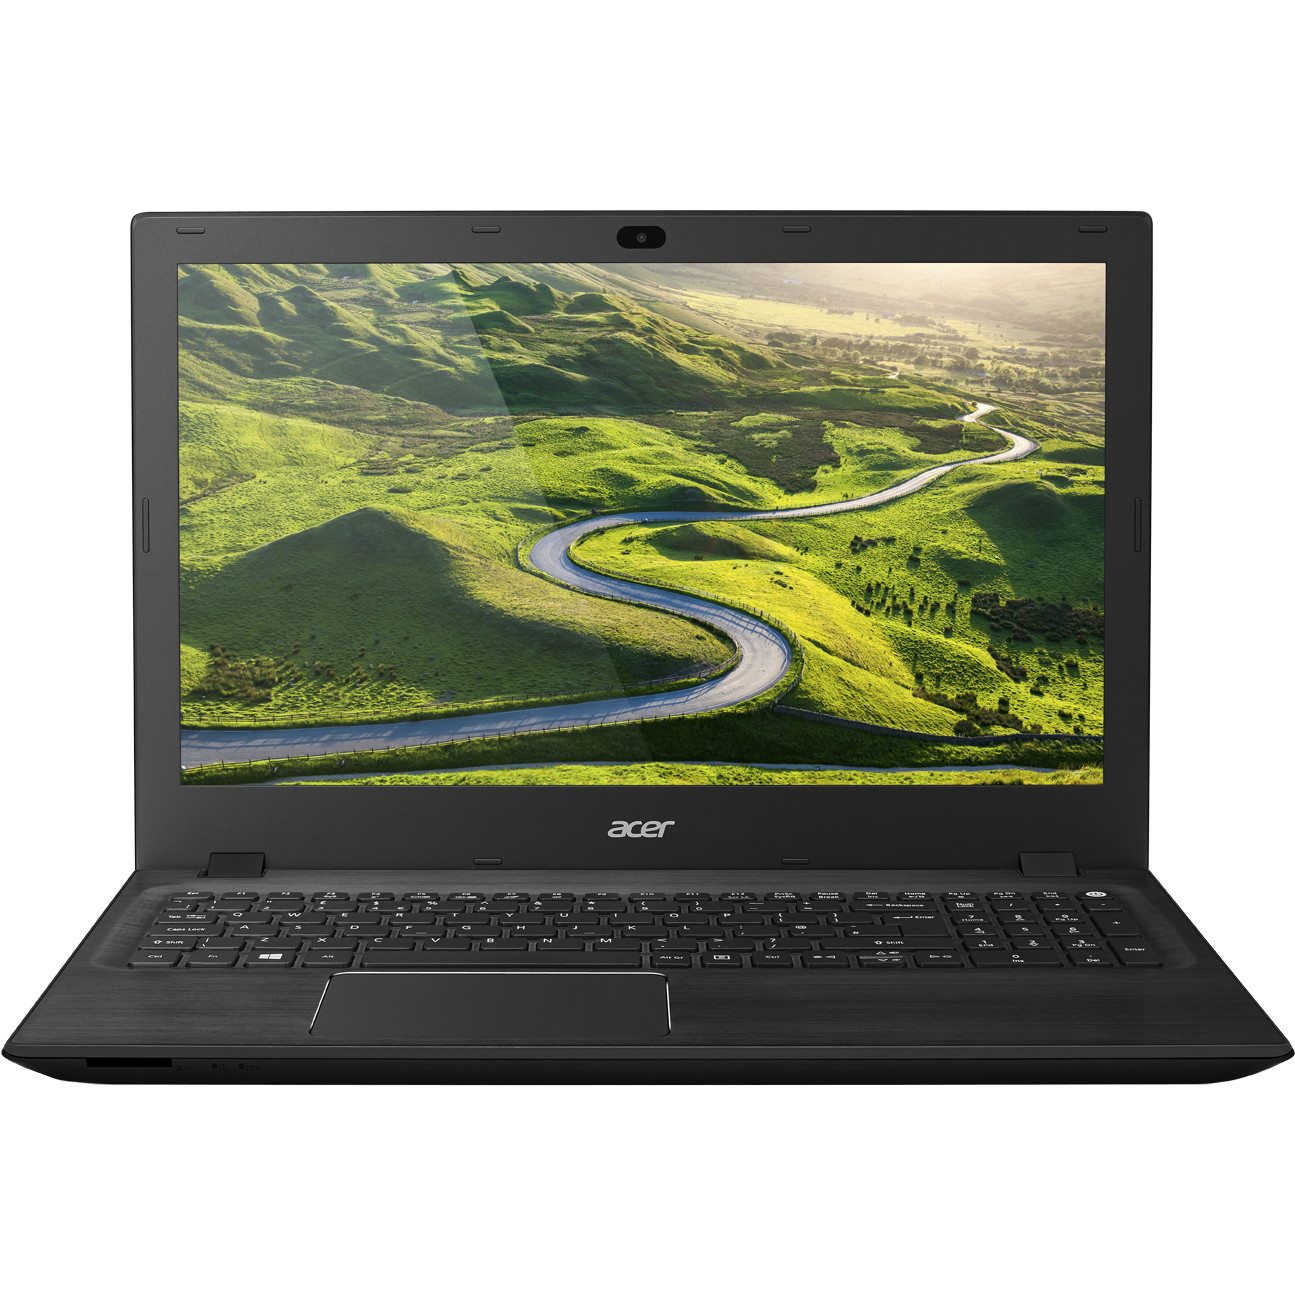  Laptop Acer F5-572G, Intel Core i7-6500U, 8GB DDR3, HDD 1TB, nVidia GeForce GT 940M 4GB, Linux 